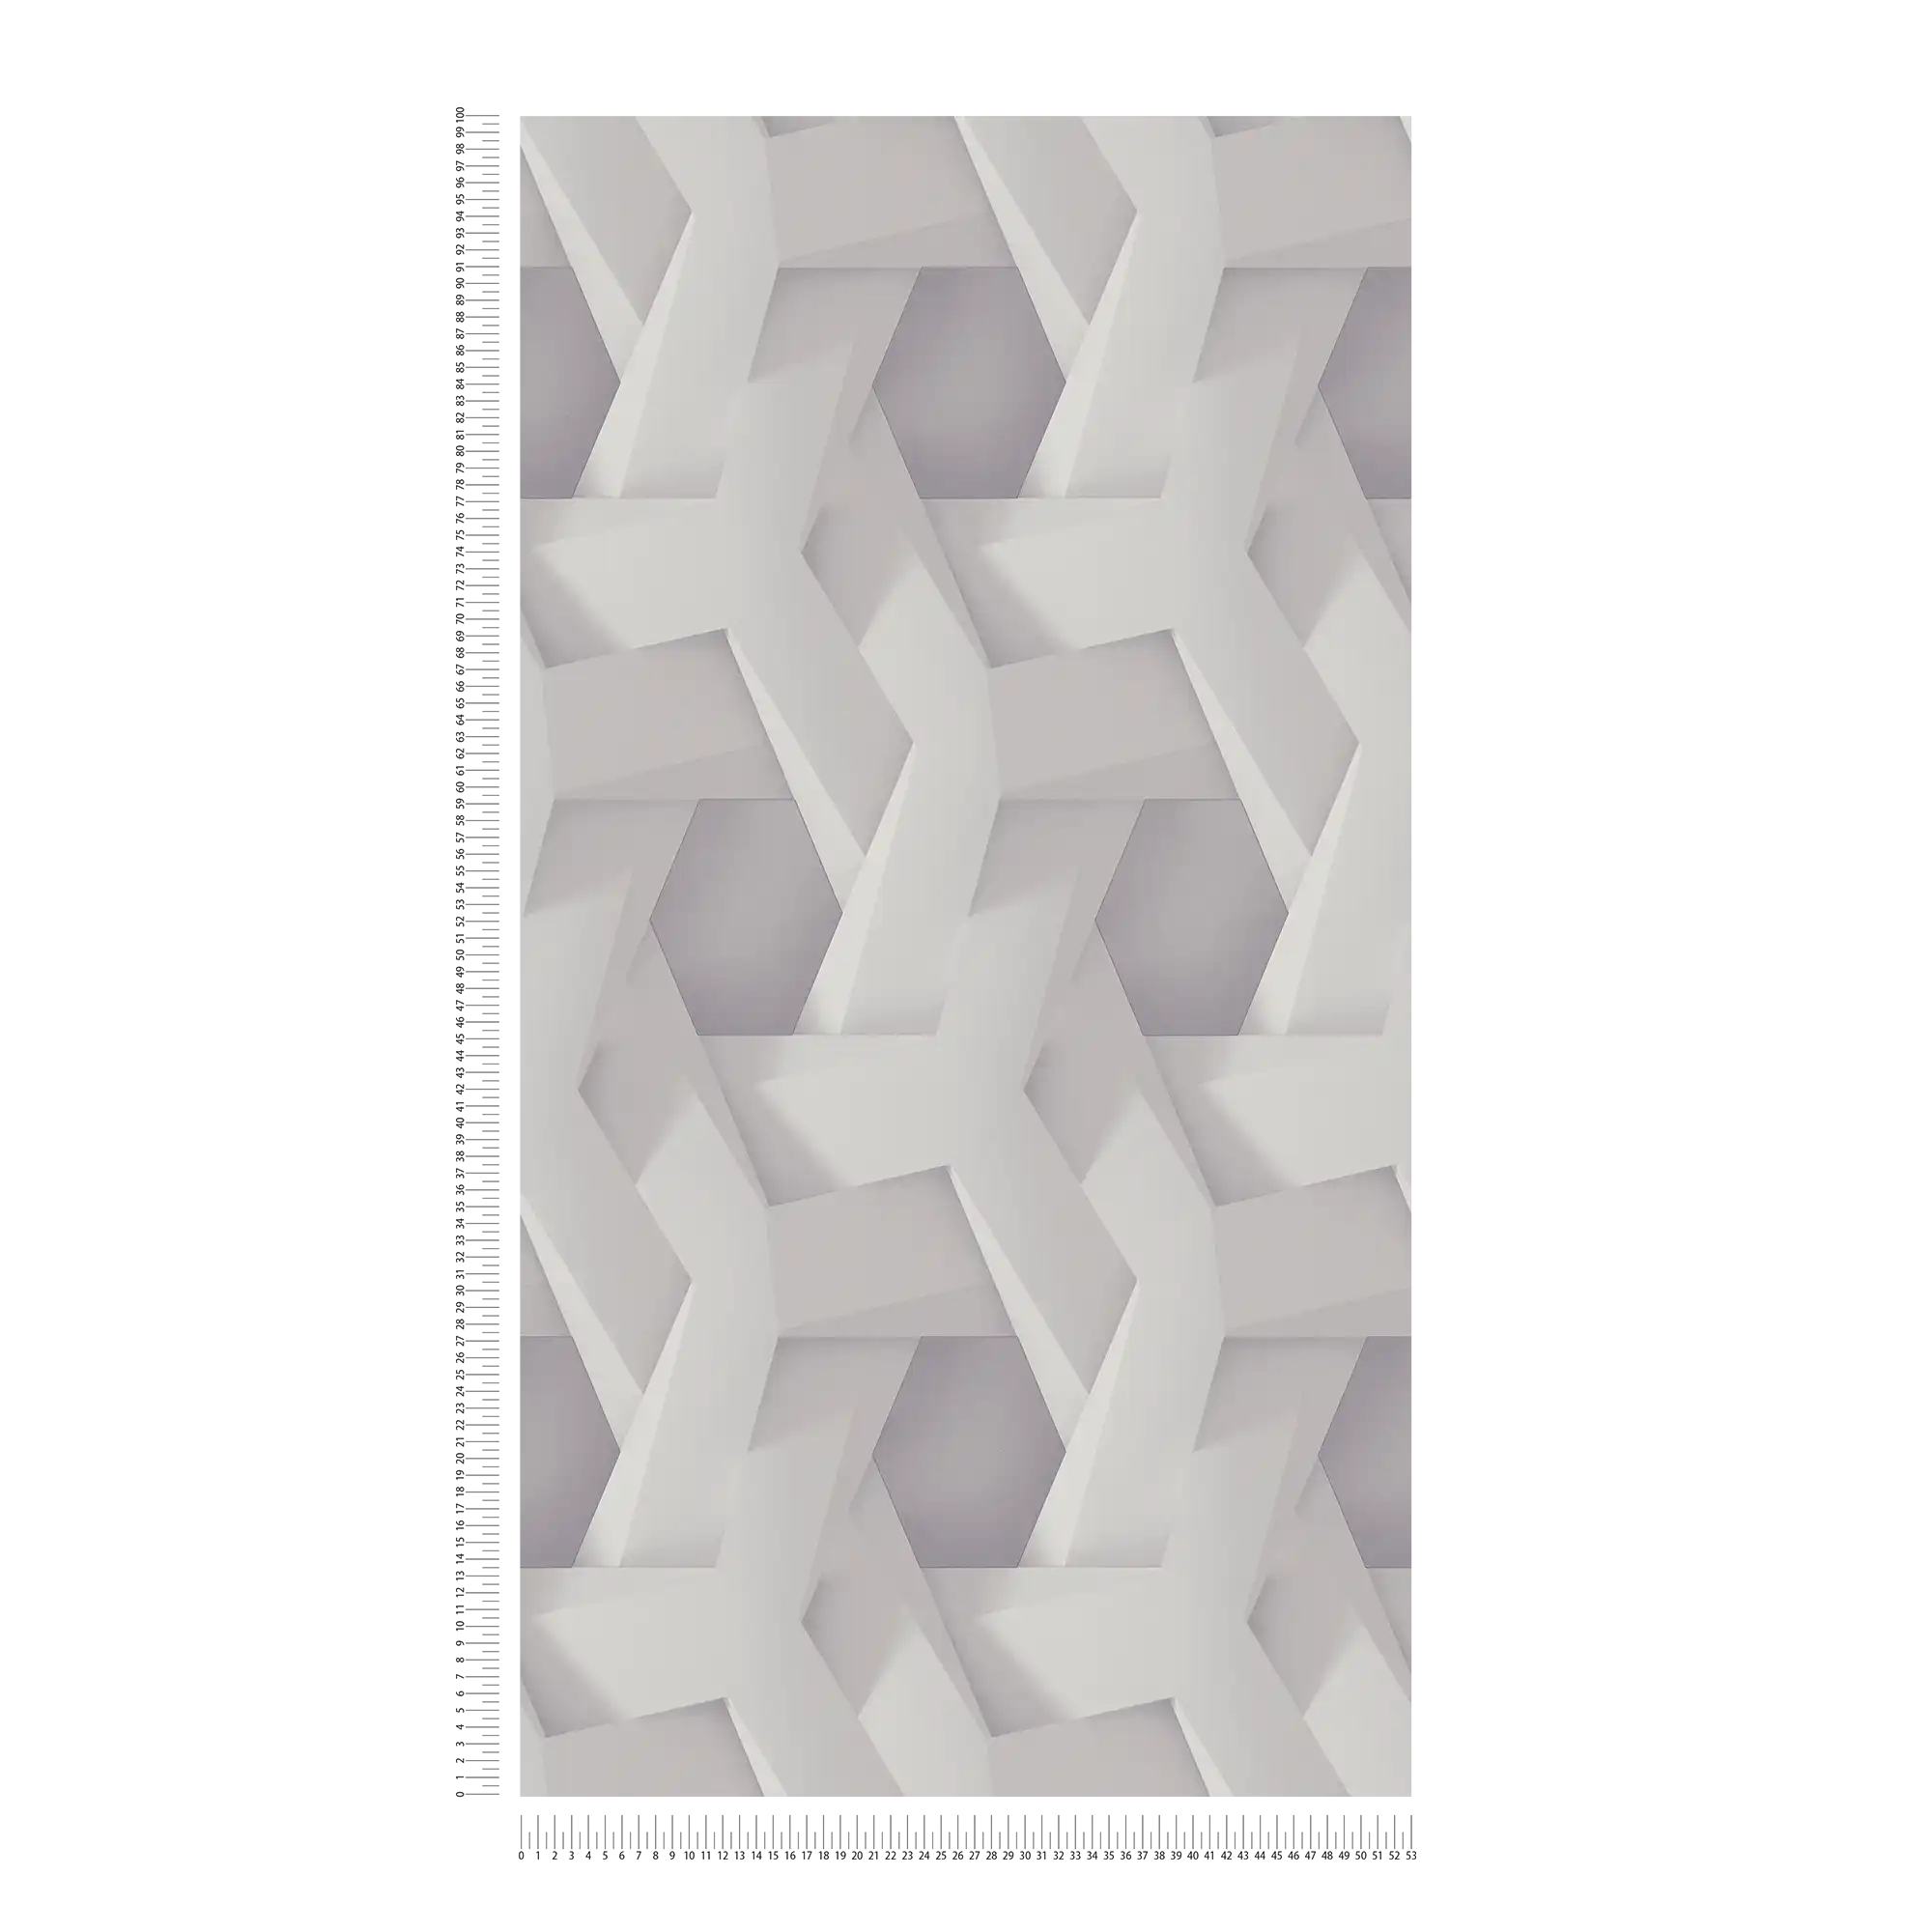             3D Tapete hellgraues Grafik-Muster mit Betonoptik
        